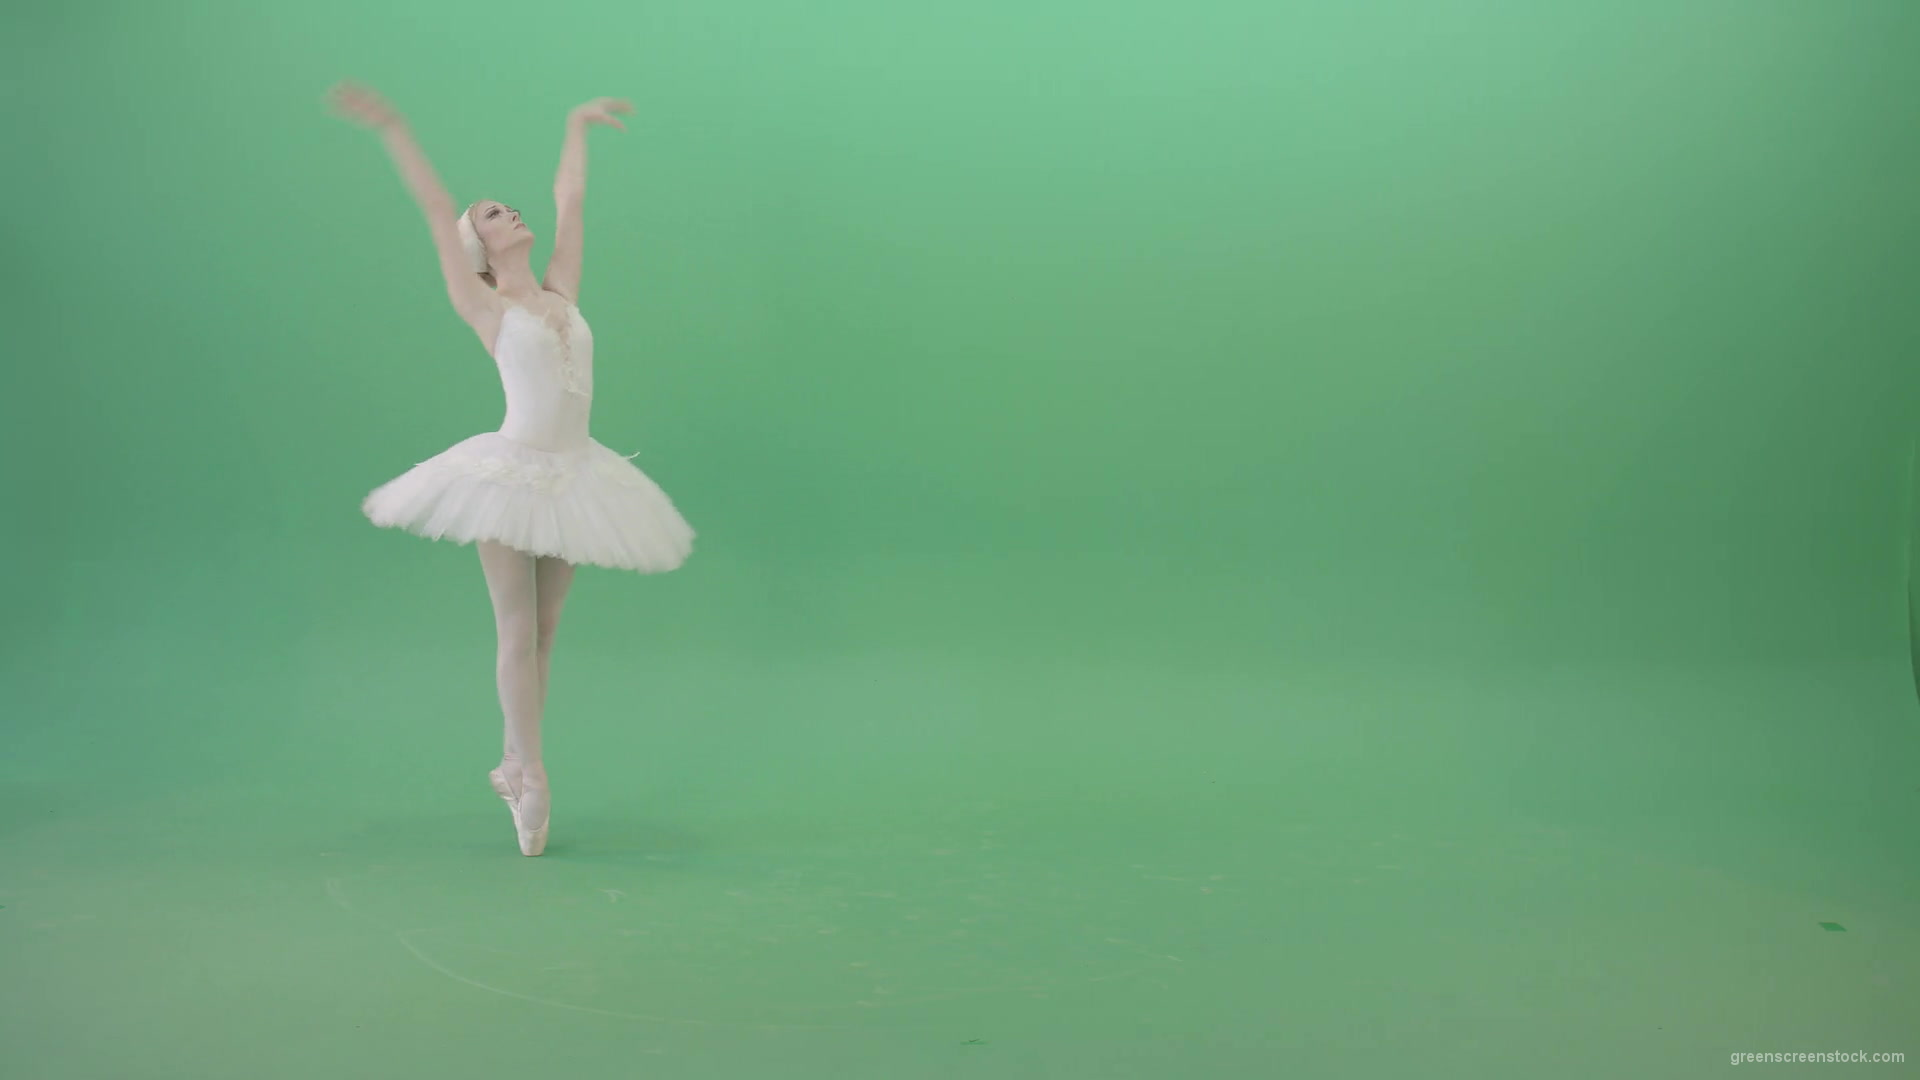 Flying-swan-laken-ballerina-dancing-with-light-on-green-screen-chroma-key-4K-Video-Footage-1920_002 Green Screen Stock